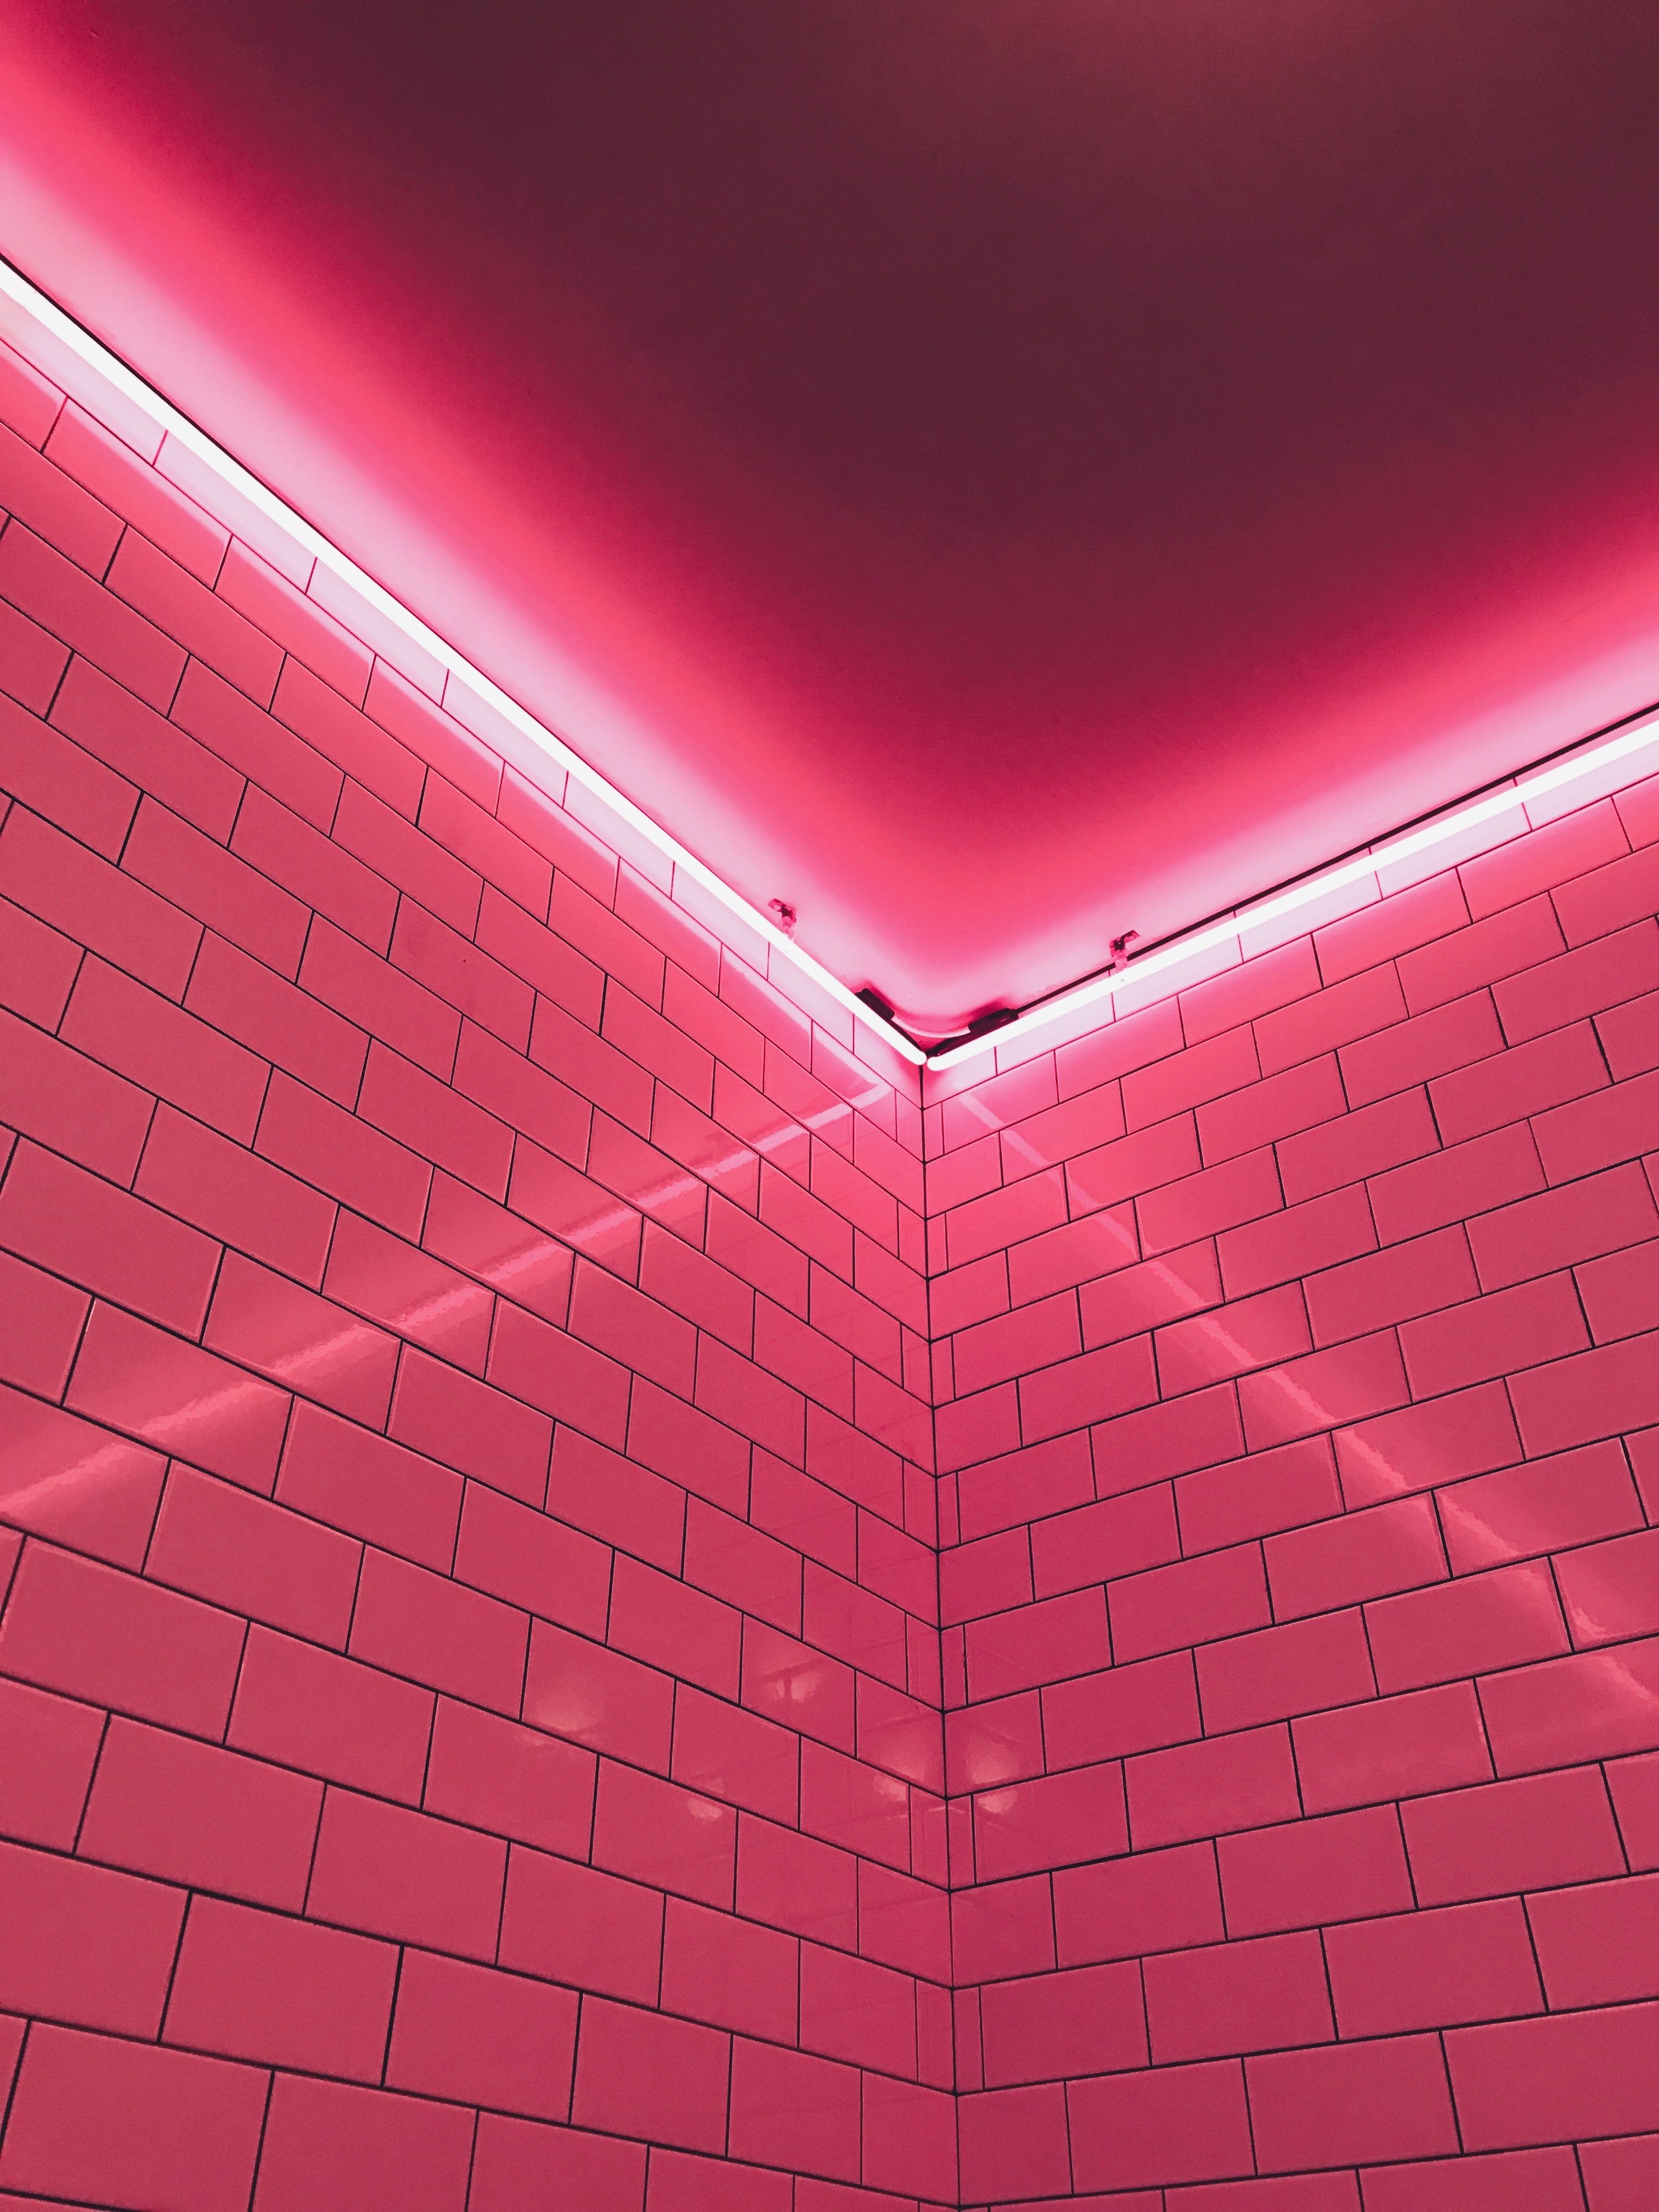 Light Fixture Pink Wallpaper iphone